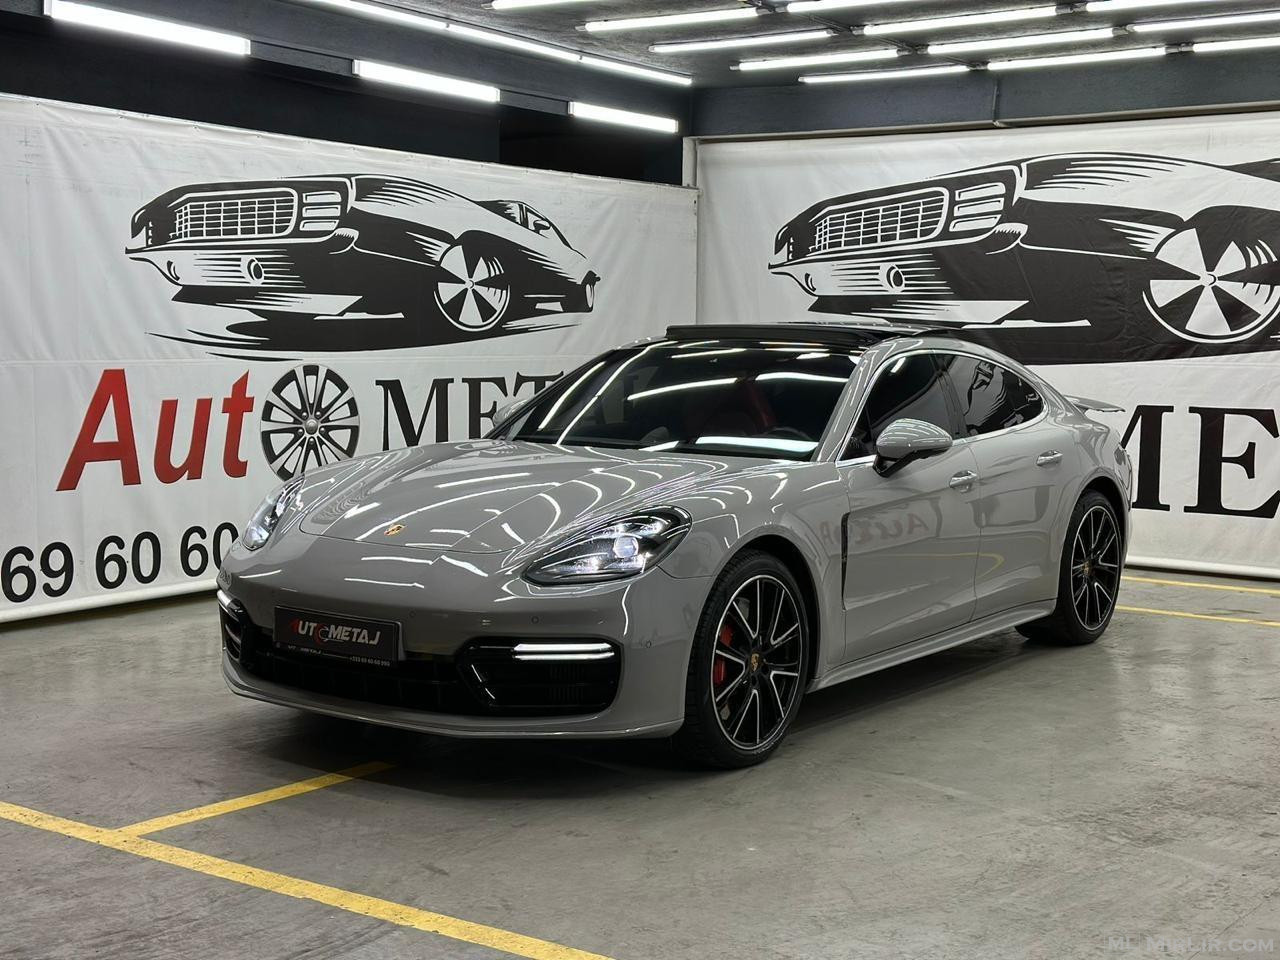  Porsche Panamera Turbo  Viti Prodhimit Fundi 2018 